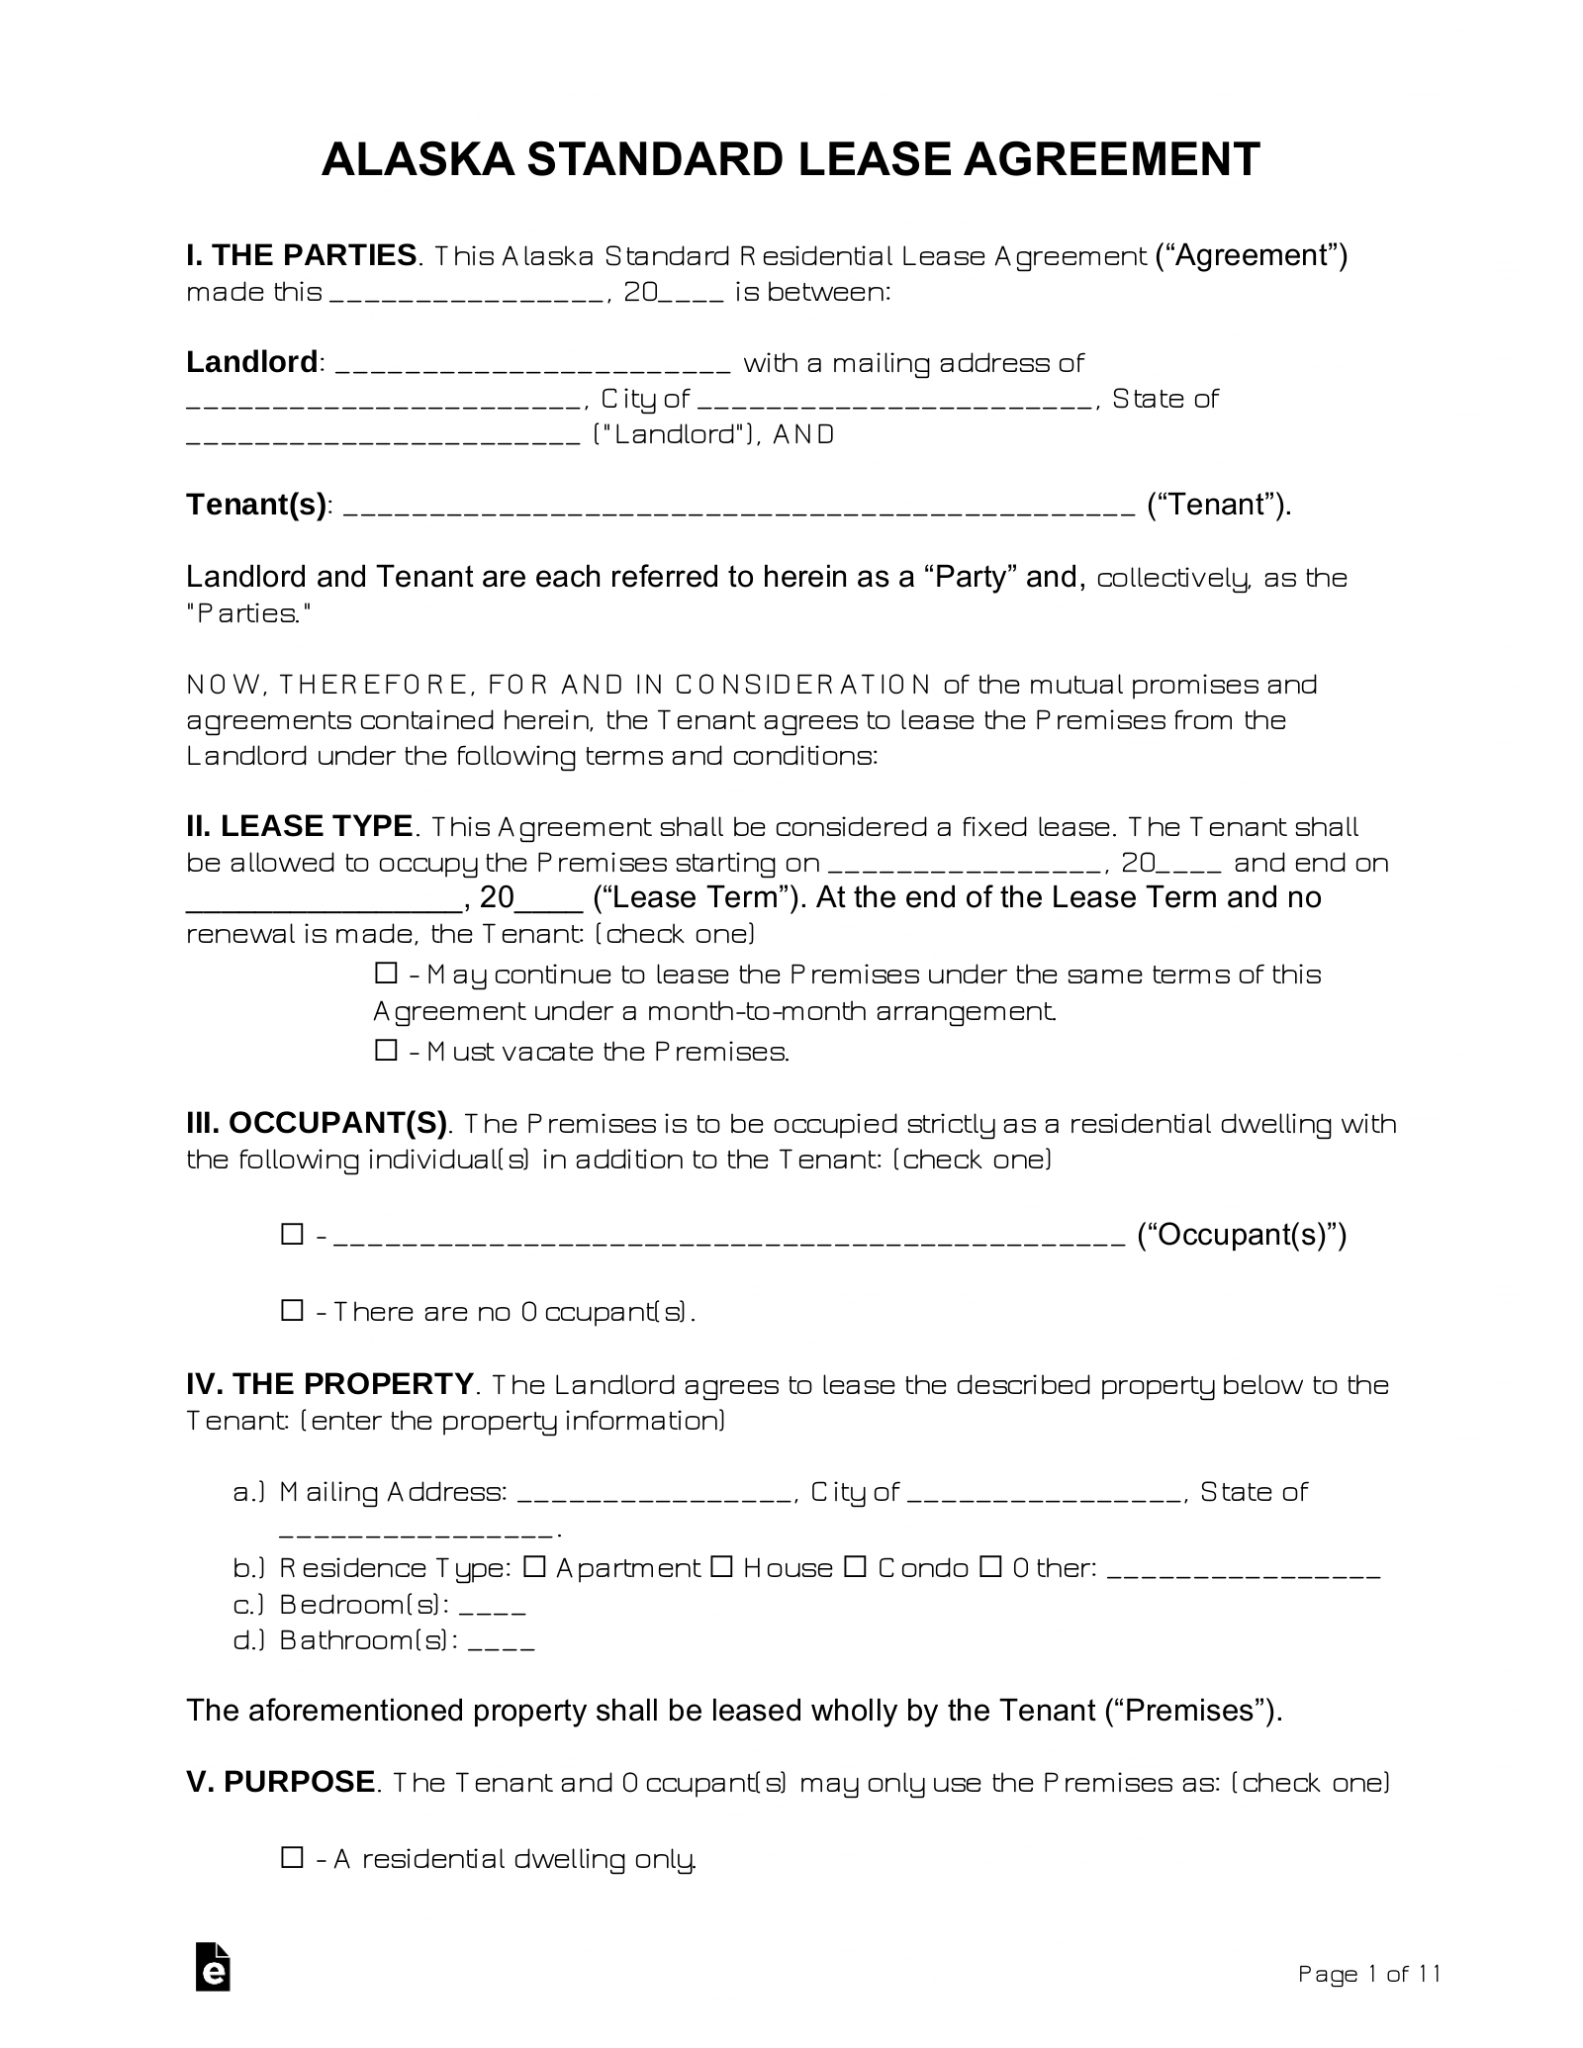 free-alaska-standard-residential-lease-agreement-template-pdf-word-eforms